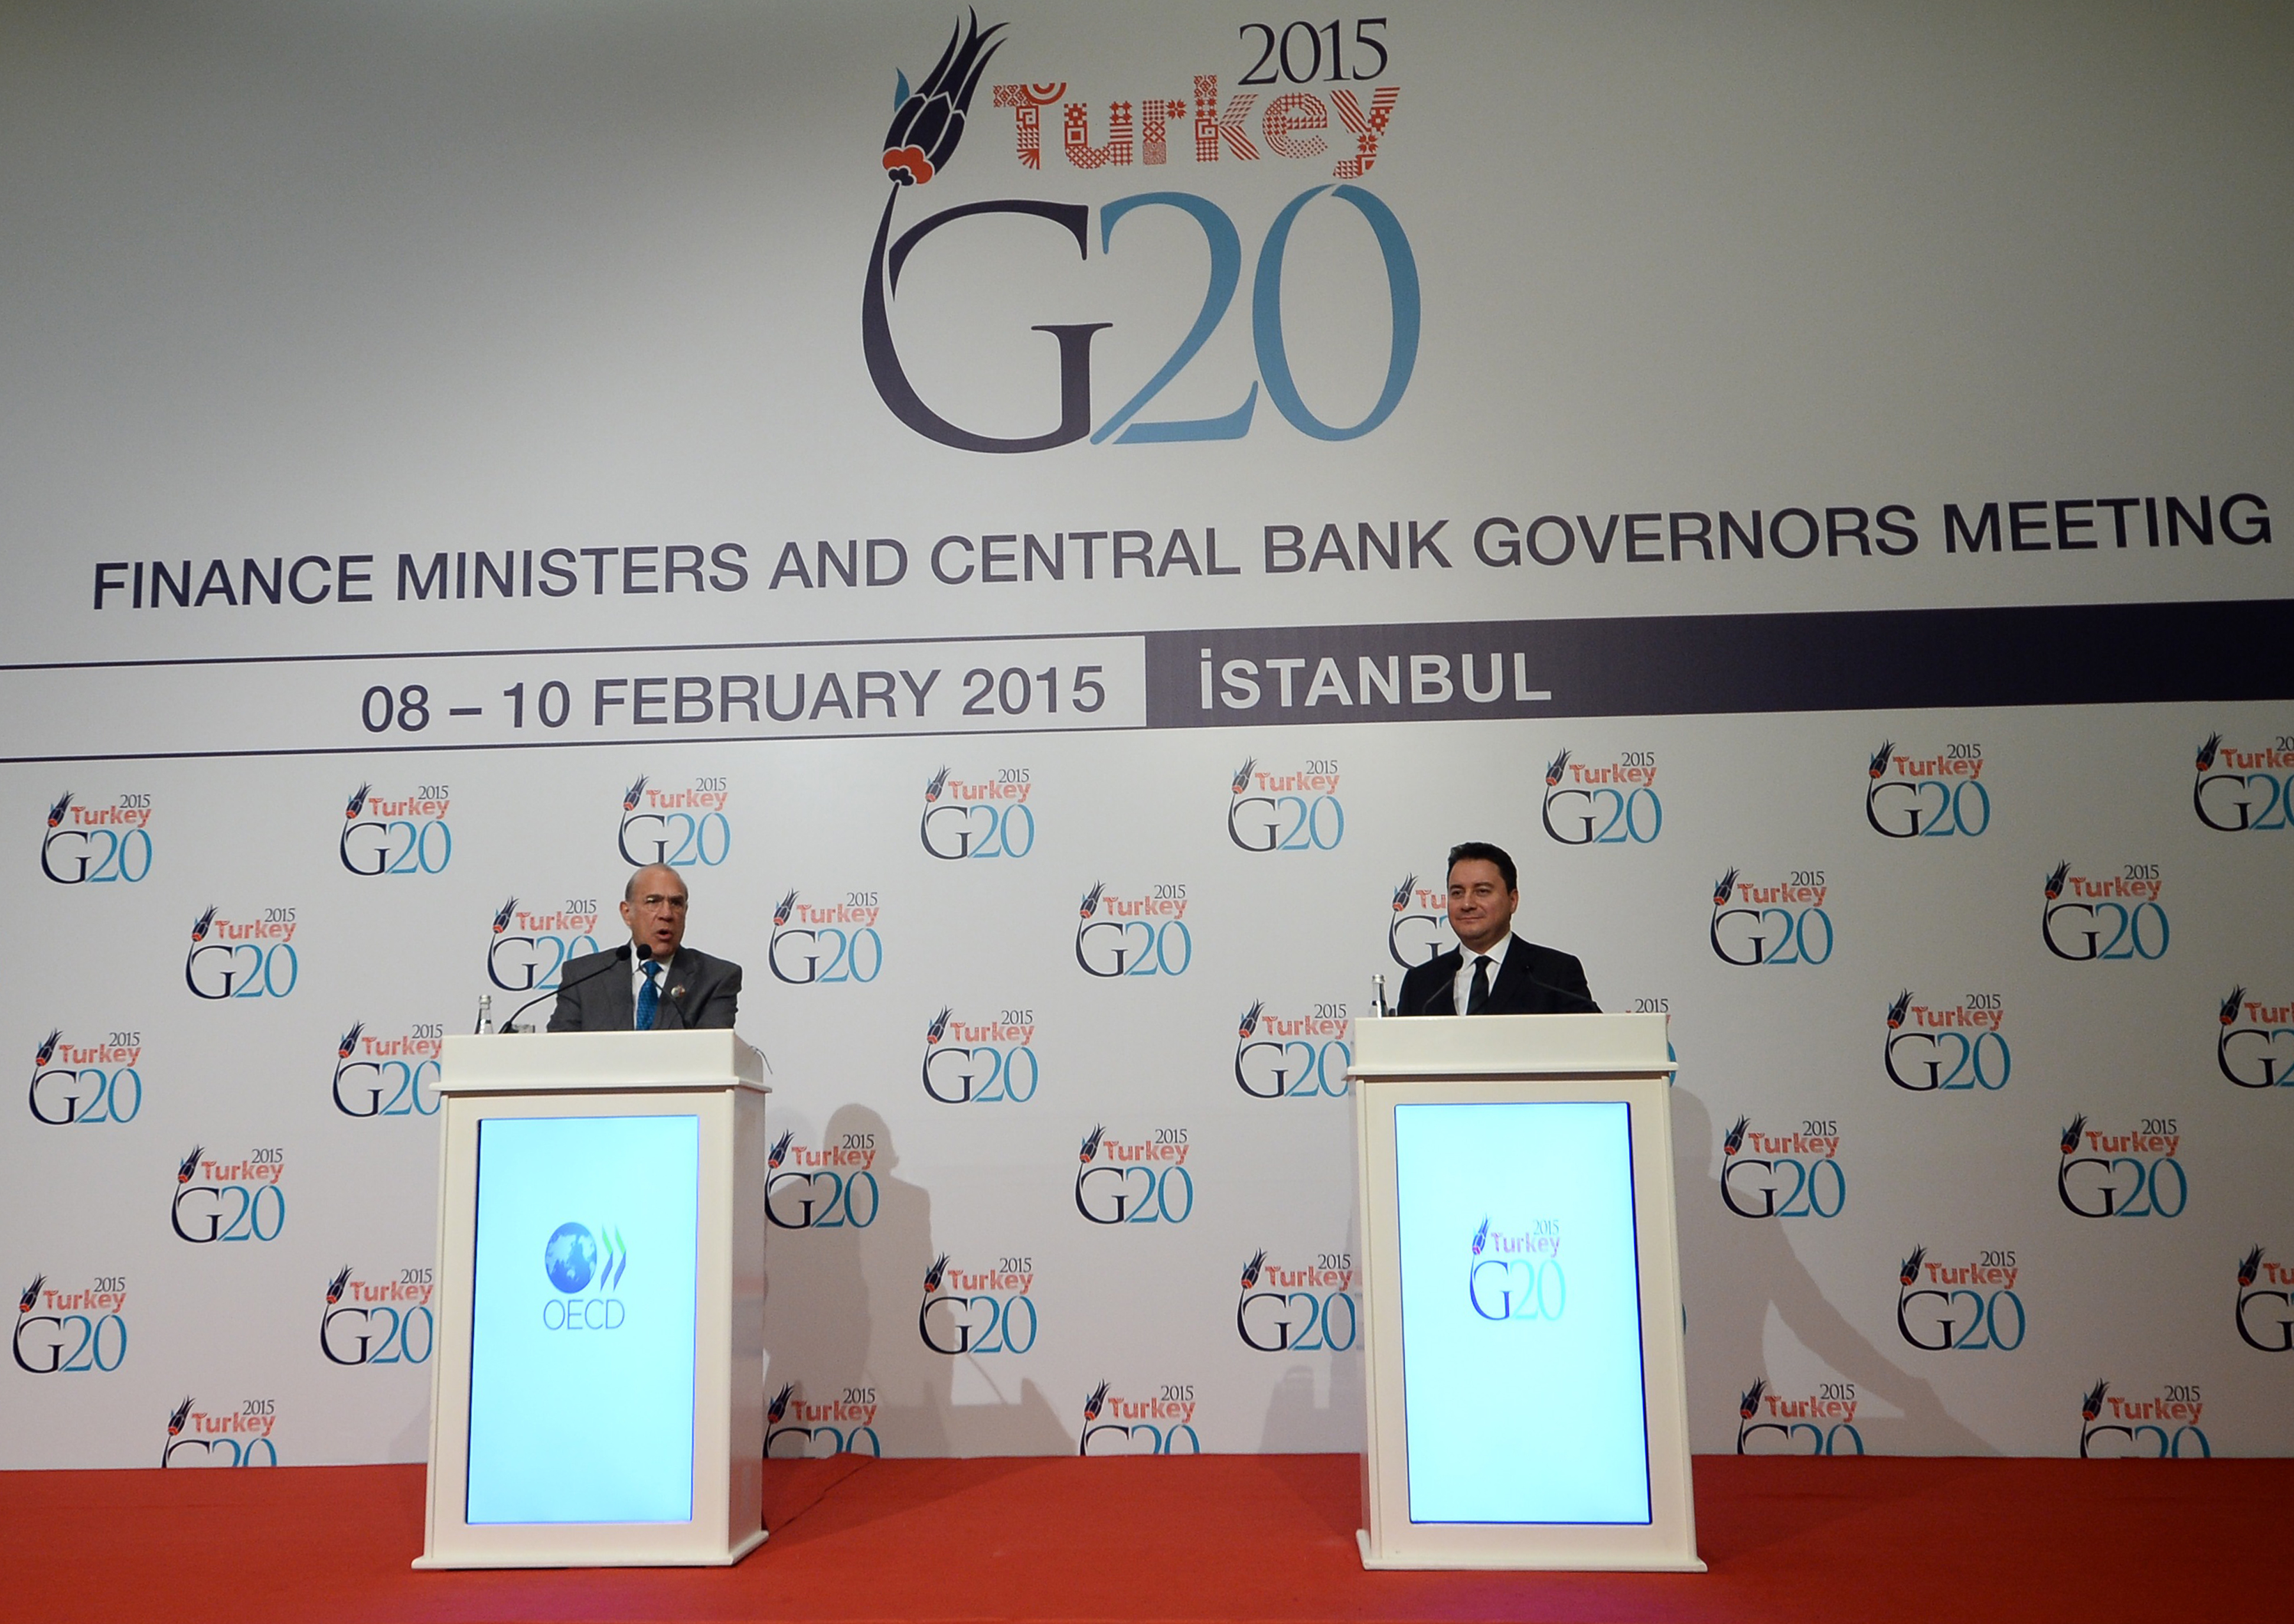 H G20 επισήμανε τους κινδύνους του παρατεταμένου αποπληθωρισμού